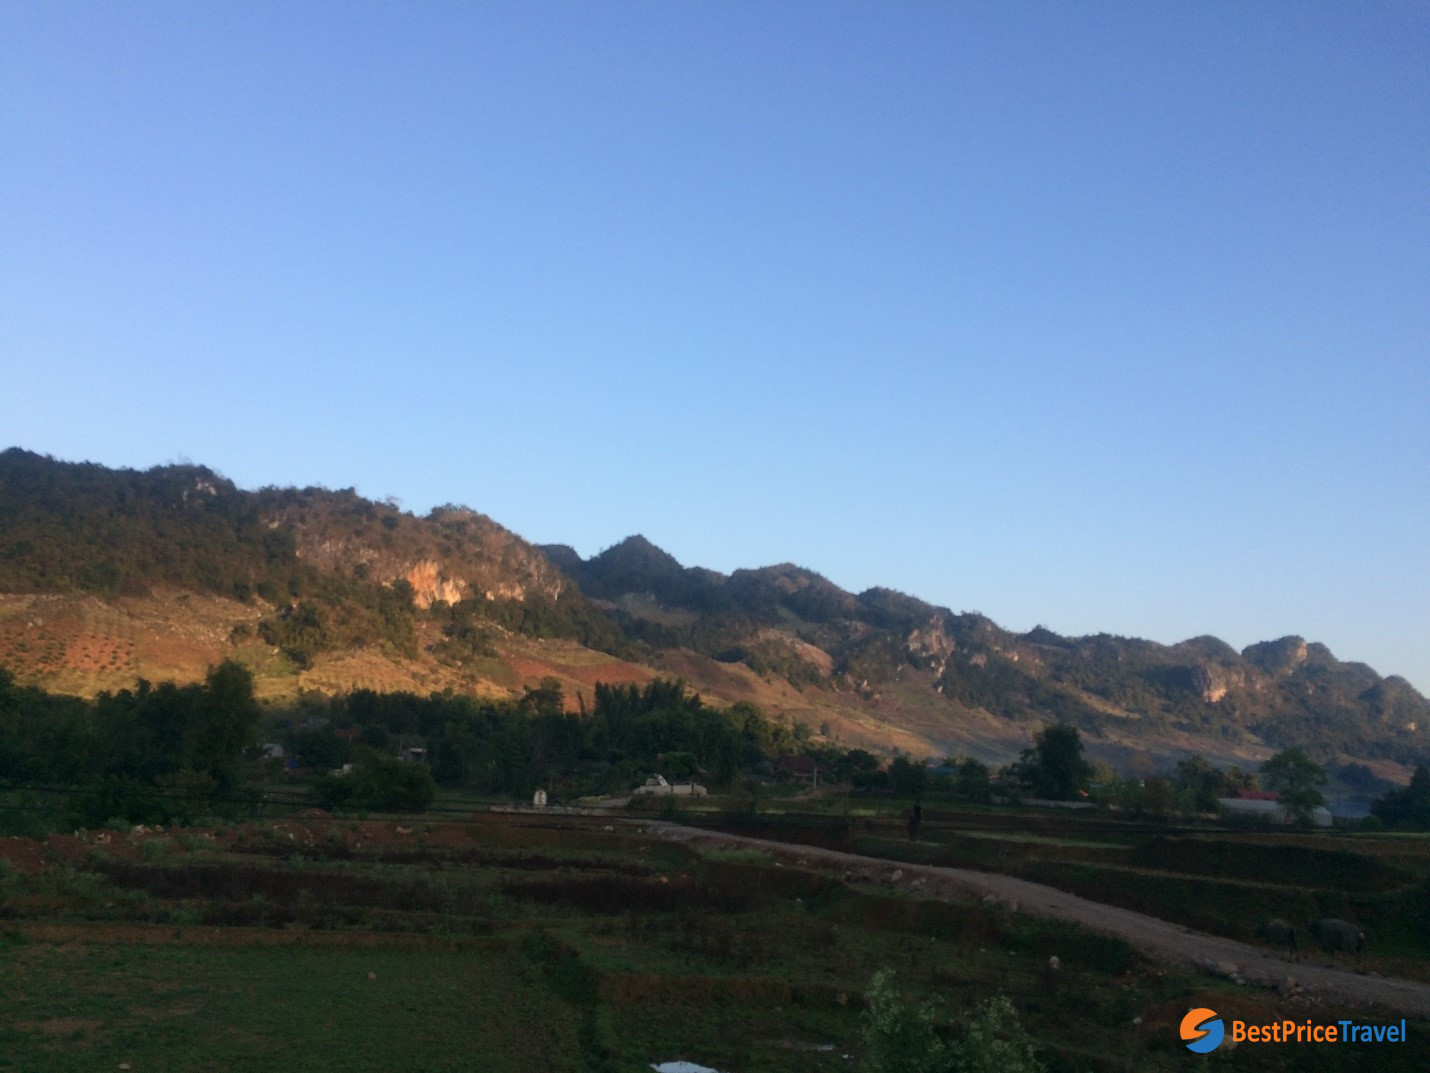 Northern Vietnam mountainous landscape